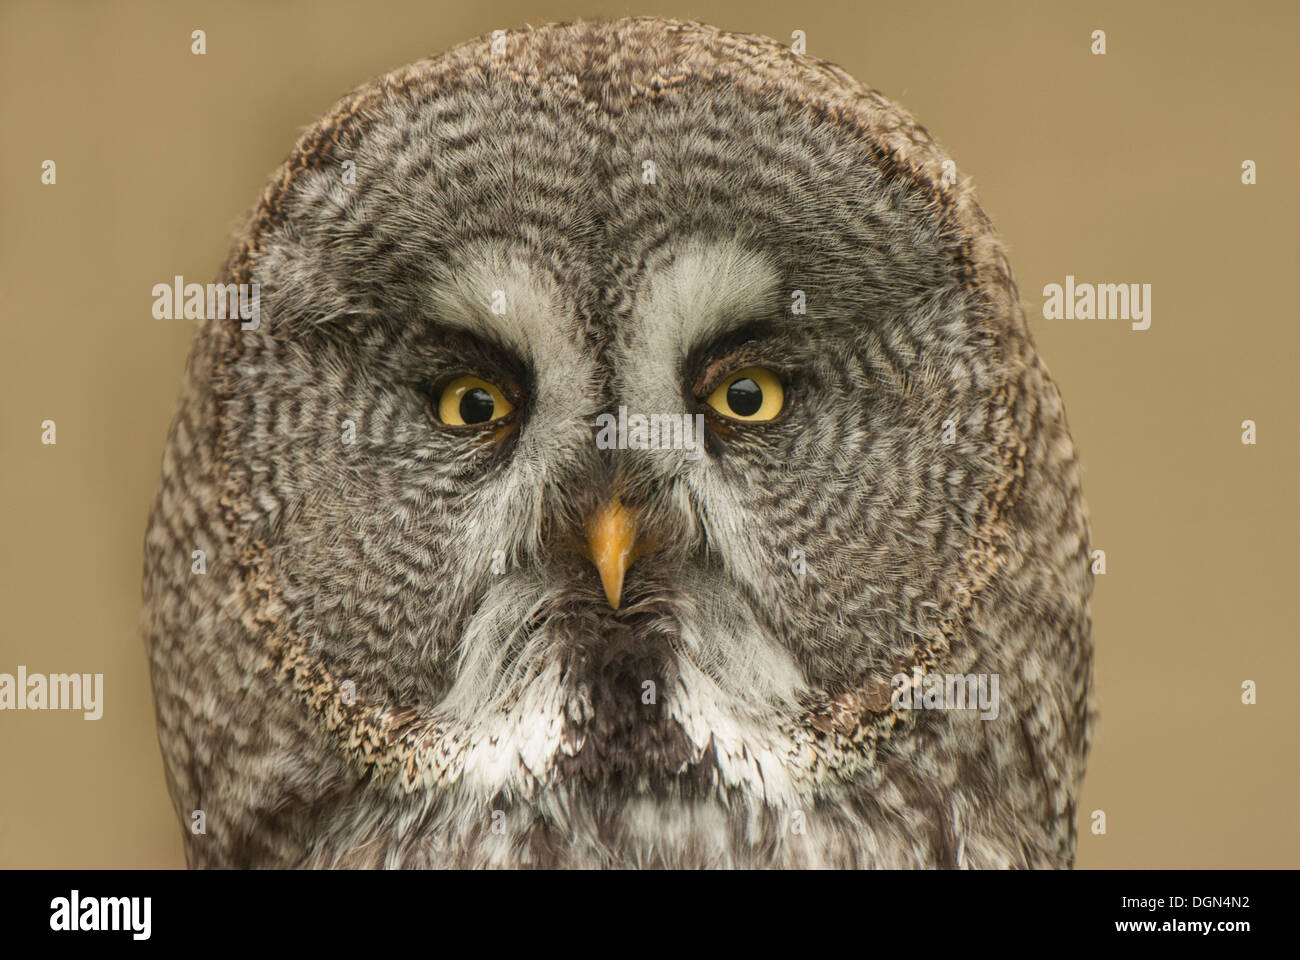 Head on of captive owl Stock Photo